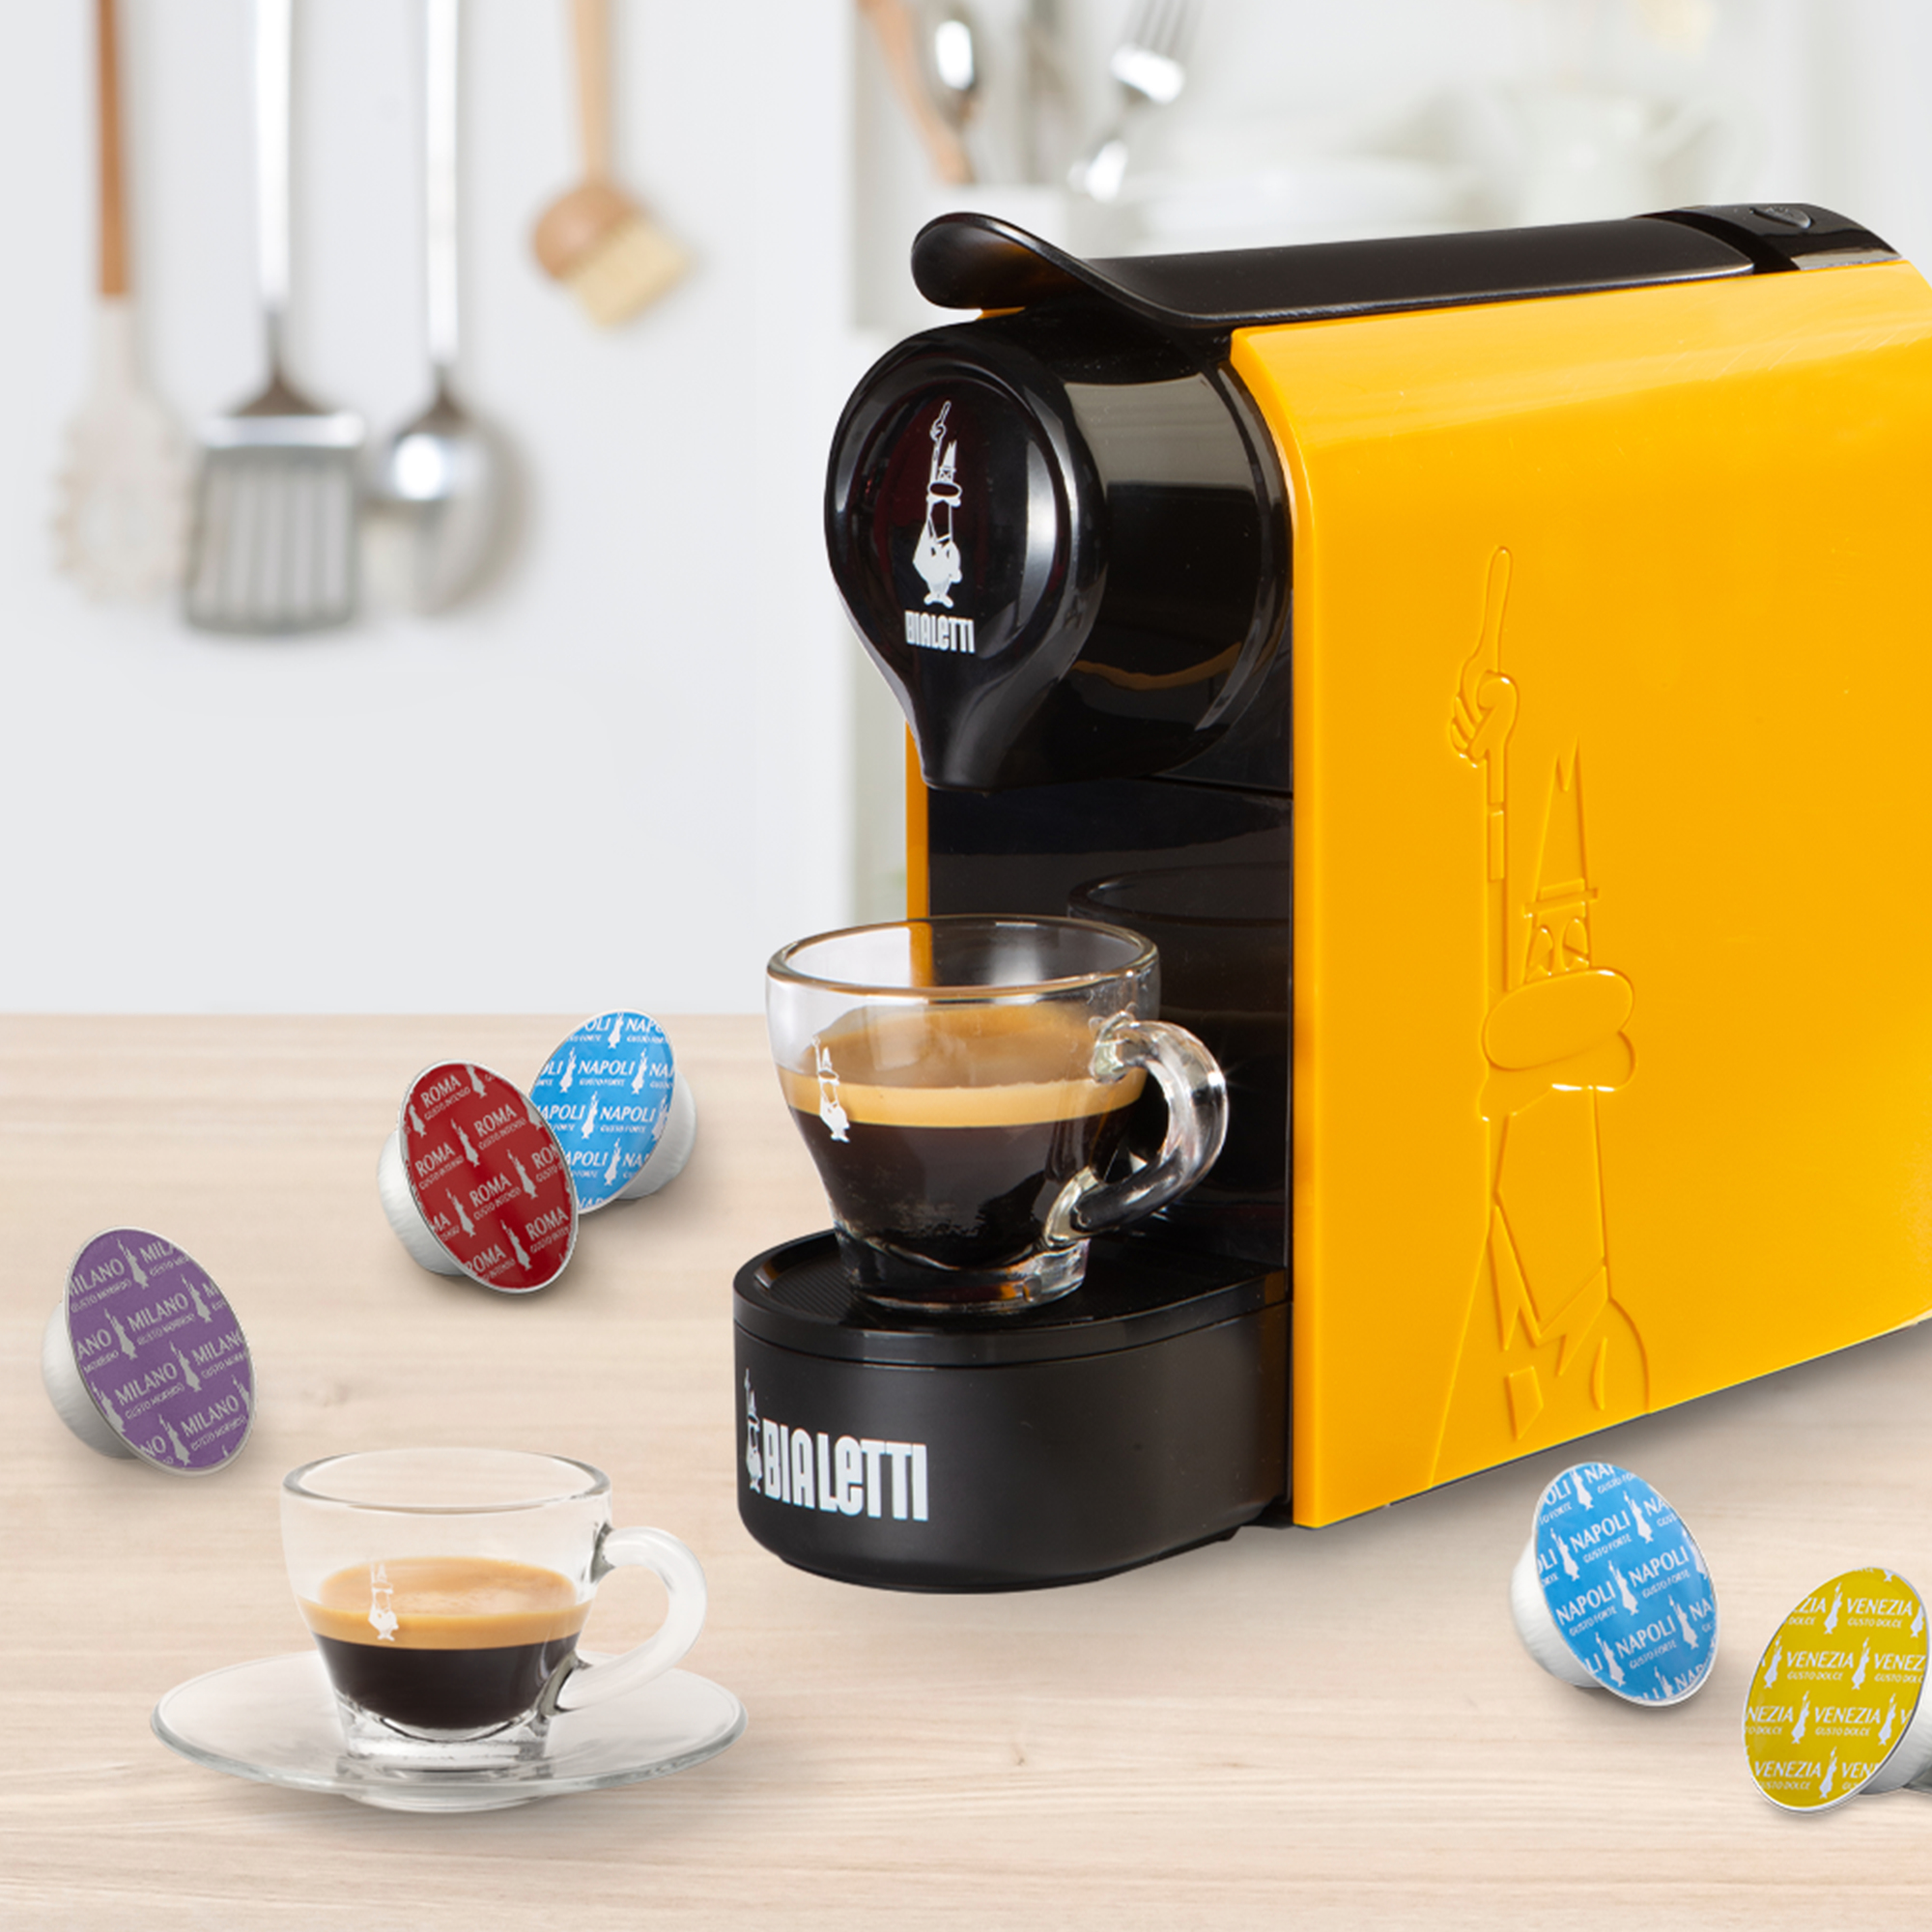 Bialetti Gioia - Espressomaschine - 0,5 l - Kaffeekapsel - 1200 W - Schwarz - Gelb